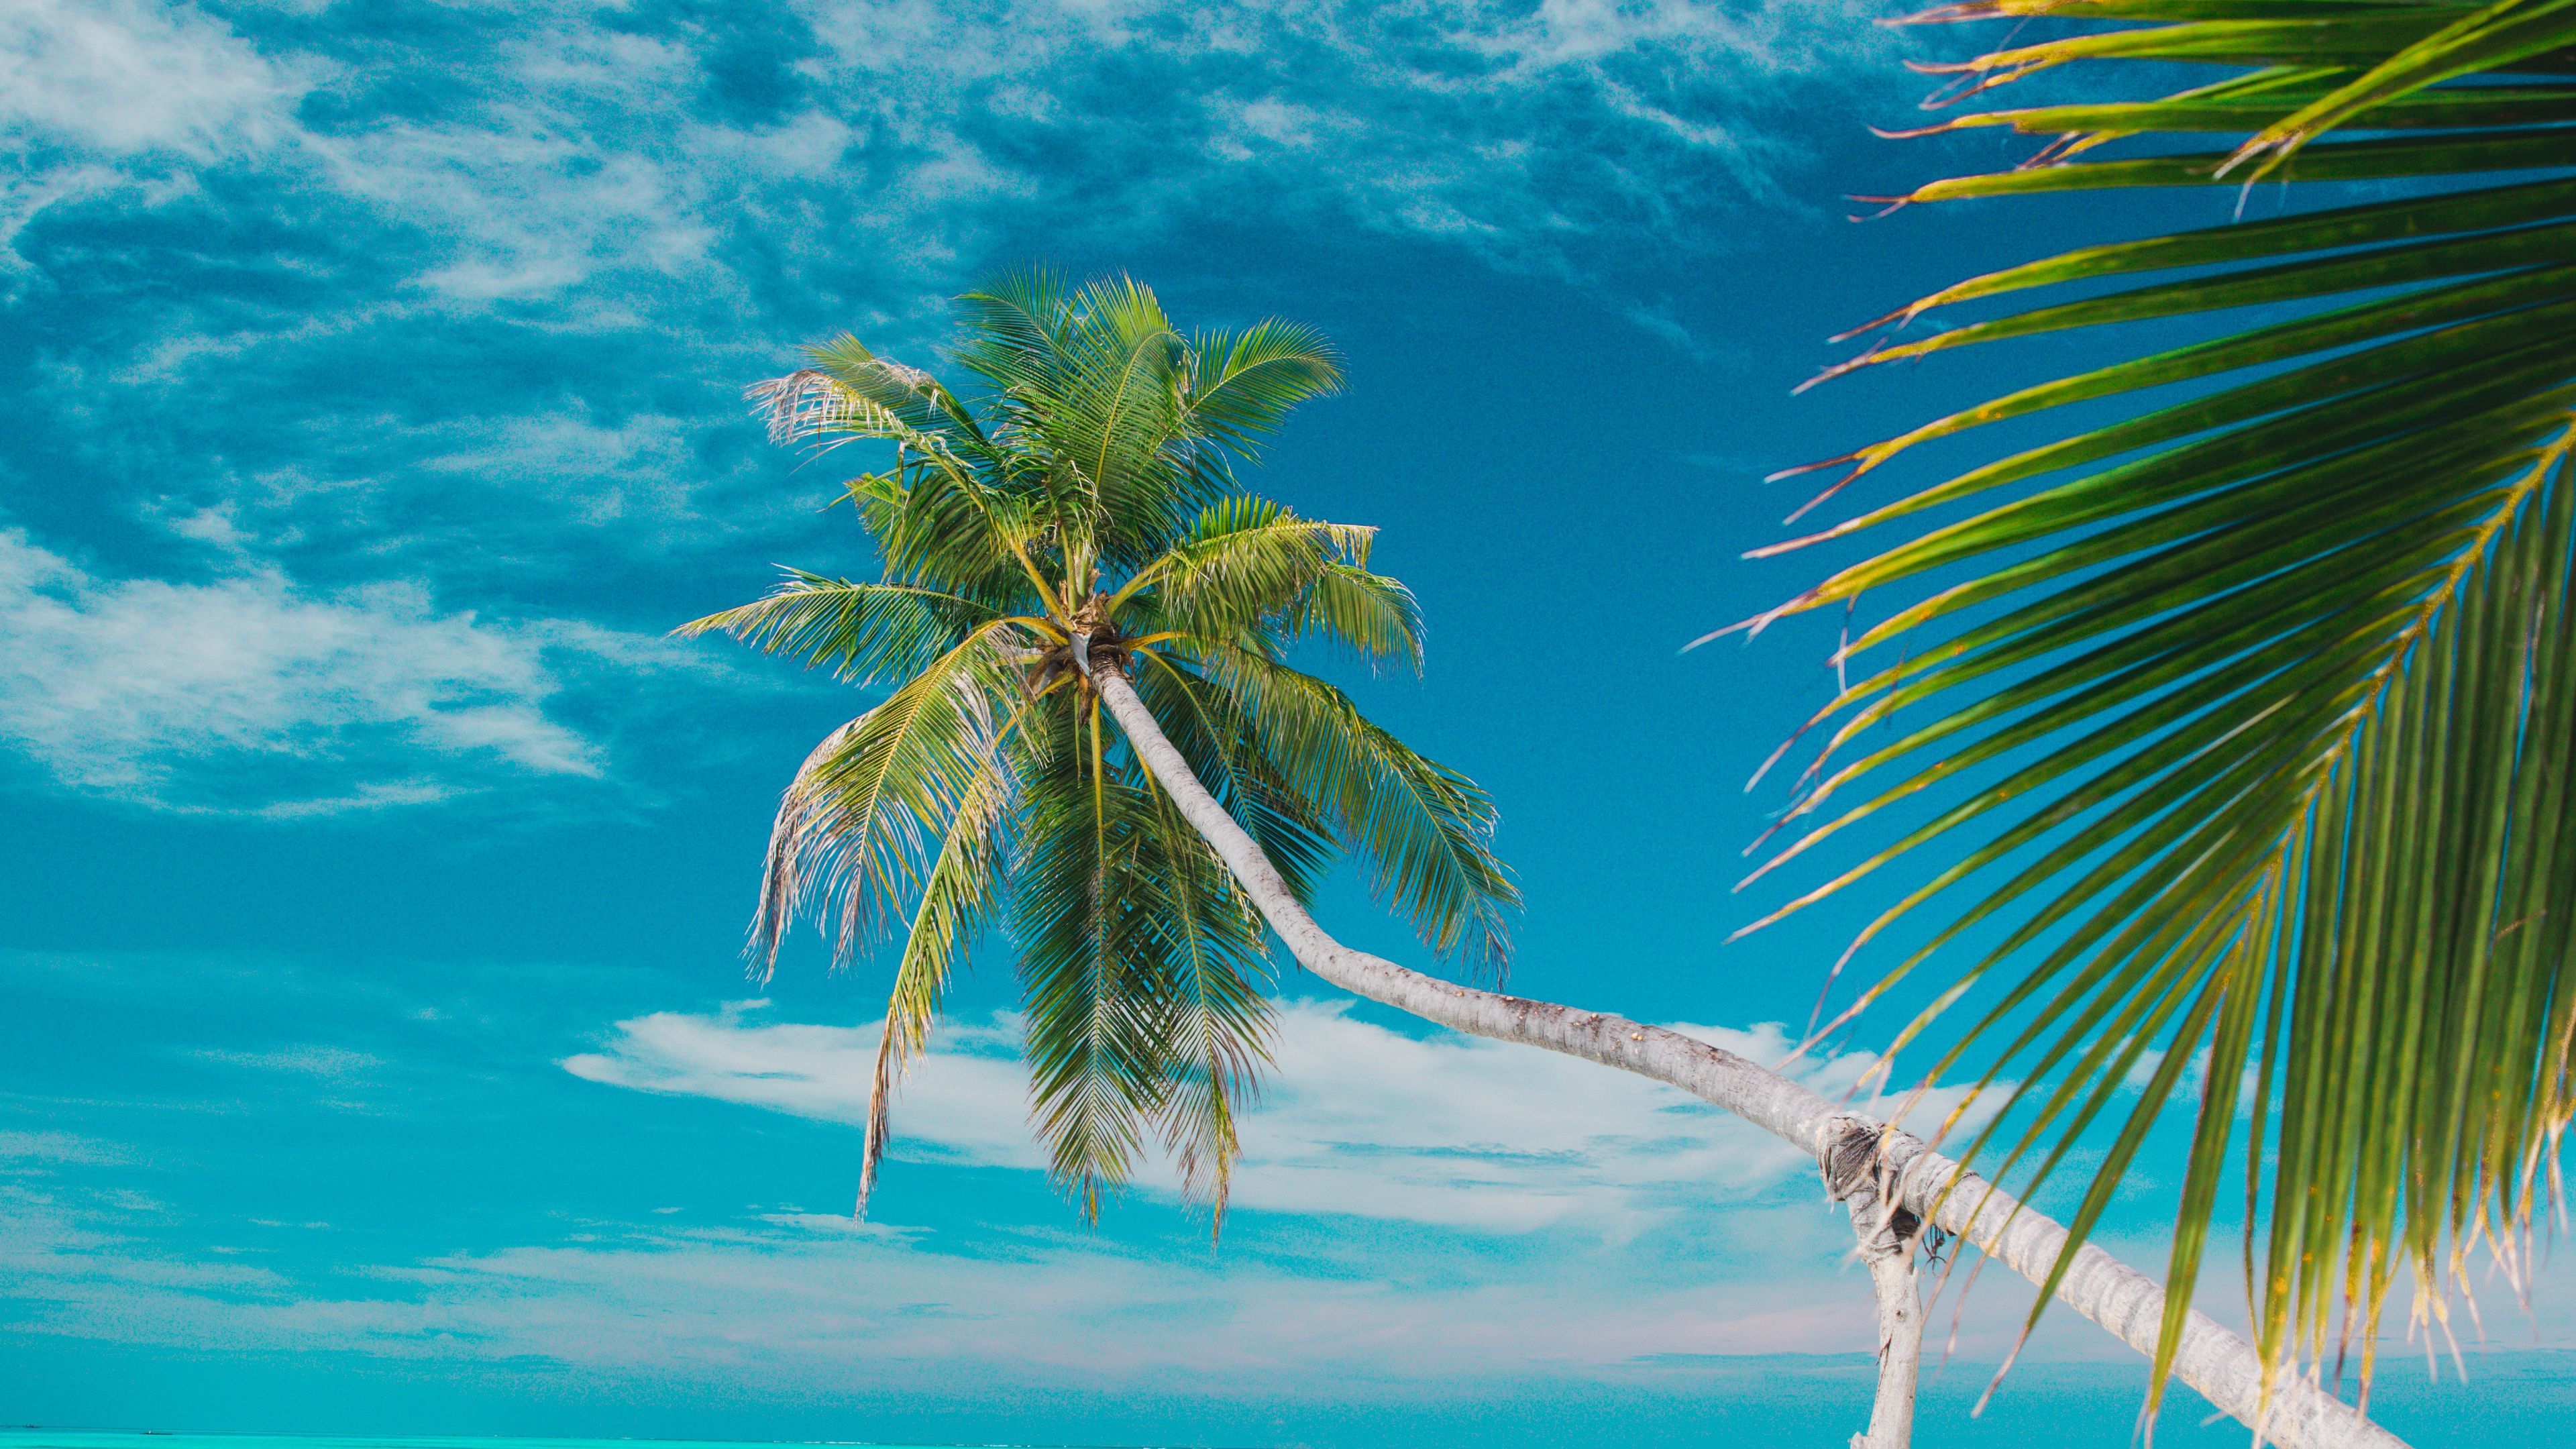 Download wallpaper 3840x2160 beach, sea, palm trees, summer, tropics 4k uhd 16:9 HD background